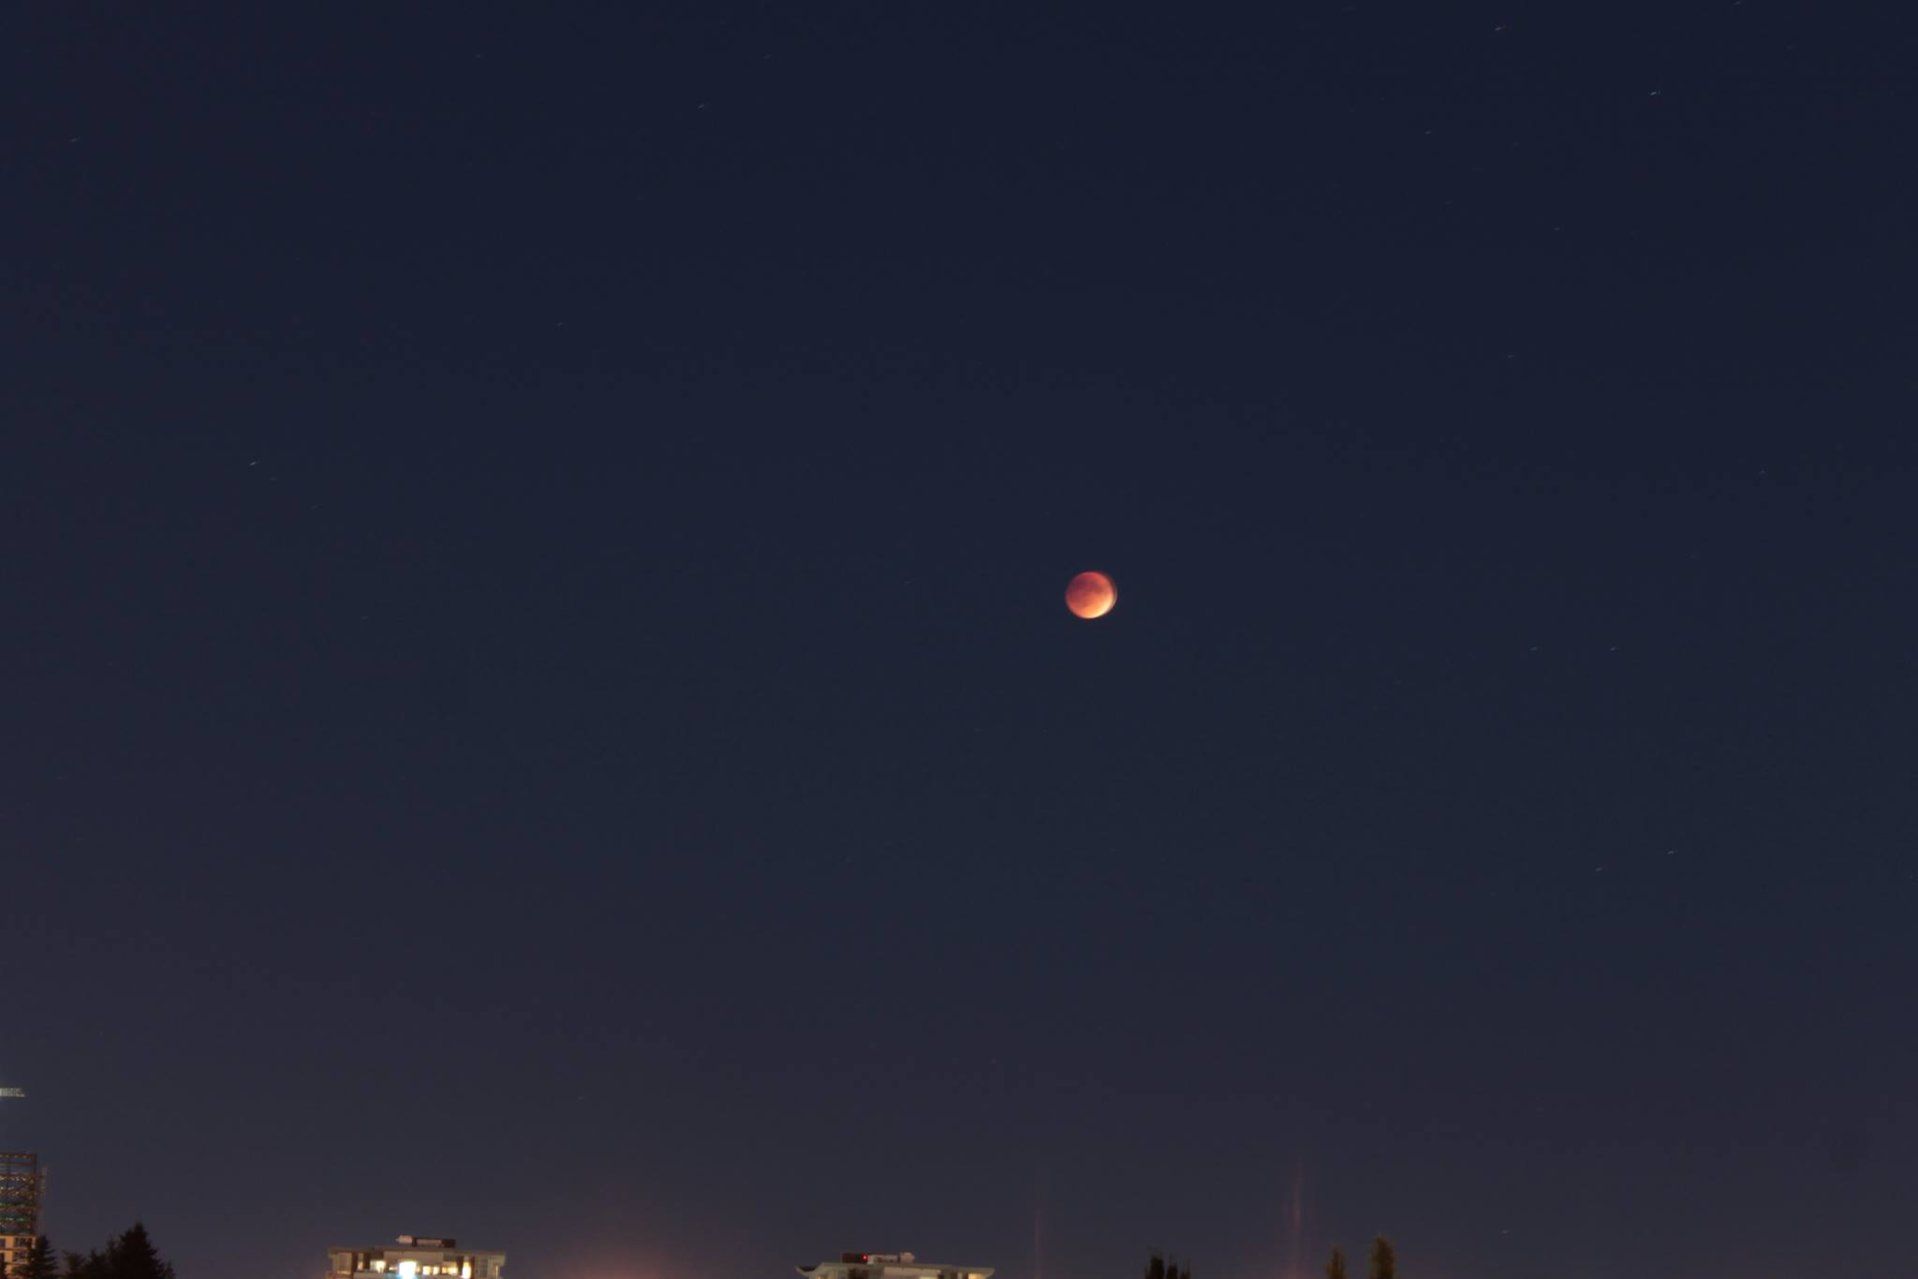 blood moon1.jpg